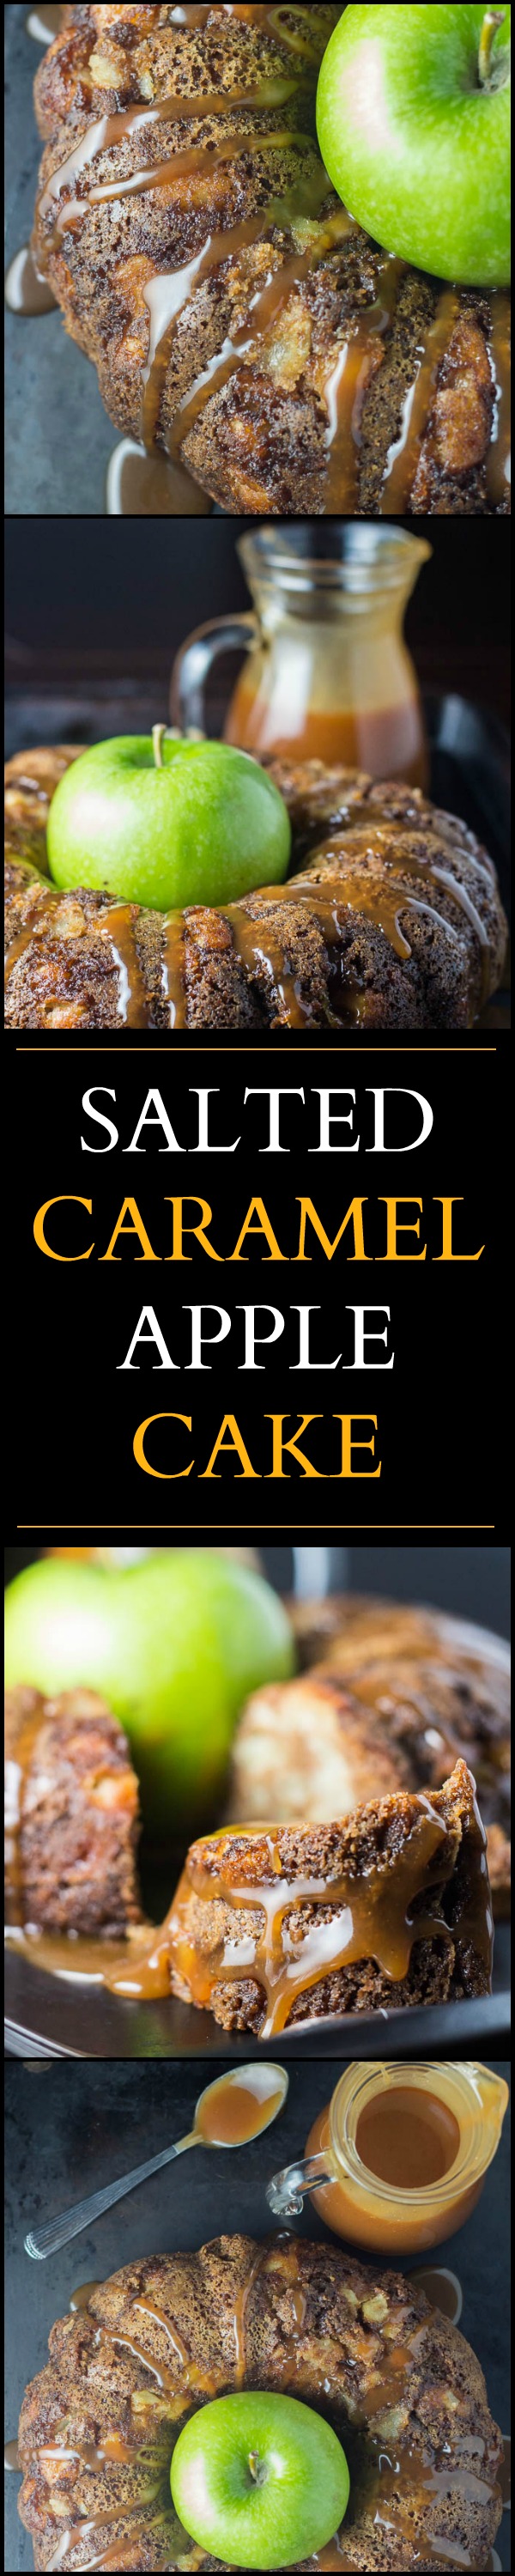 Salted Caramel Apple Cake | Catz in the Kitchen | catzinthekitchen.com | #caramel #fall #cake